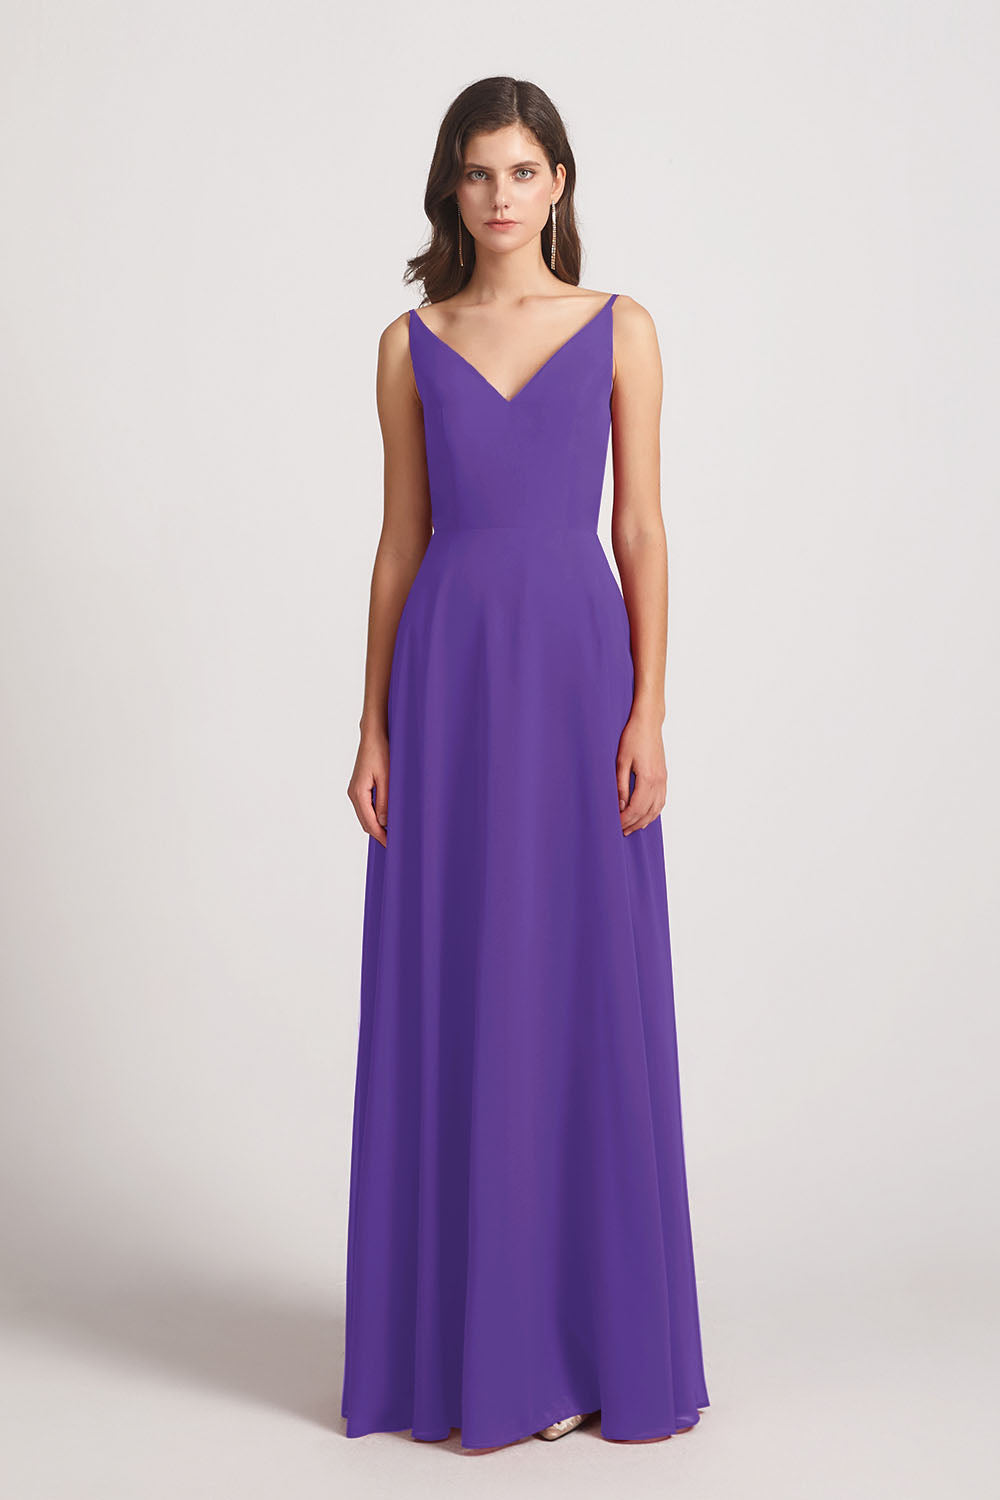 Alfa Bridal Purple V-Neck Spaghetti Straps Chiffon Bridesmaid Dresses With Back Tie (AF0002)